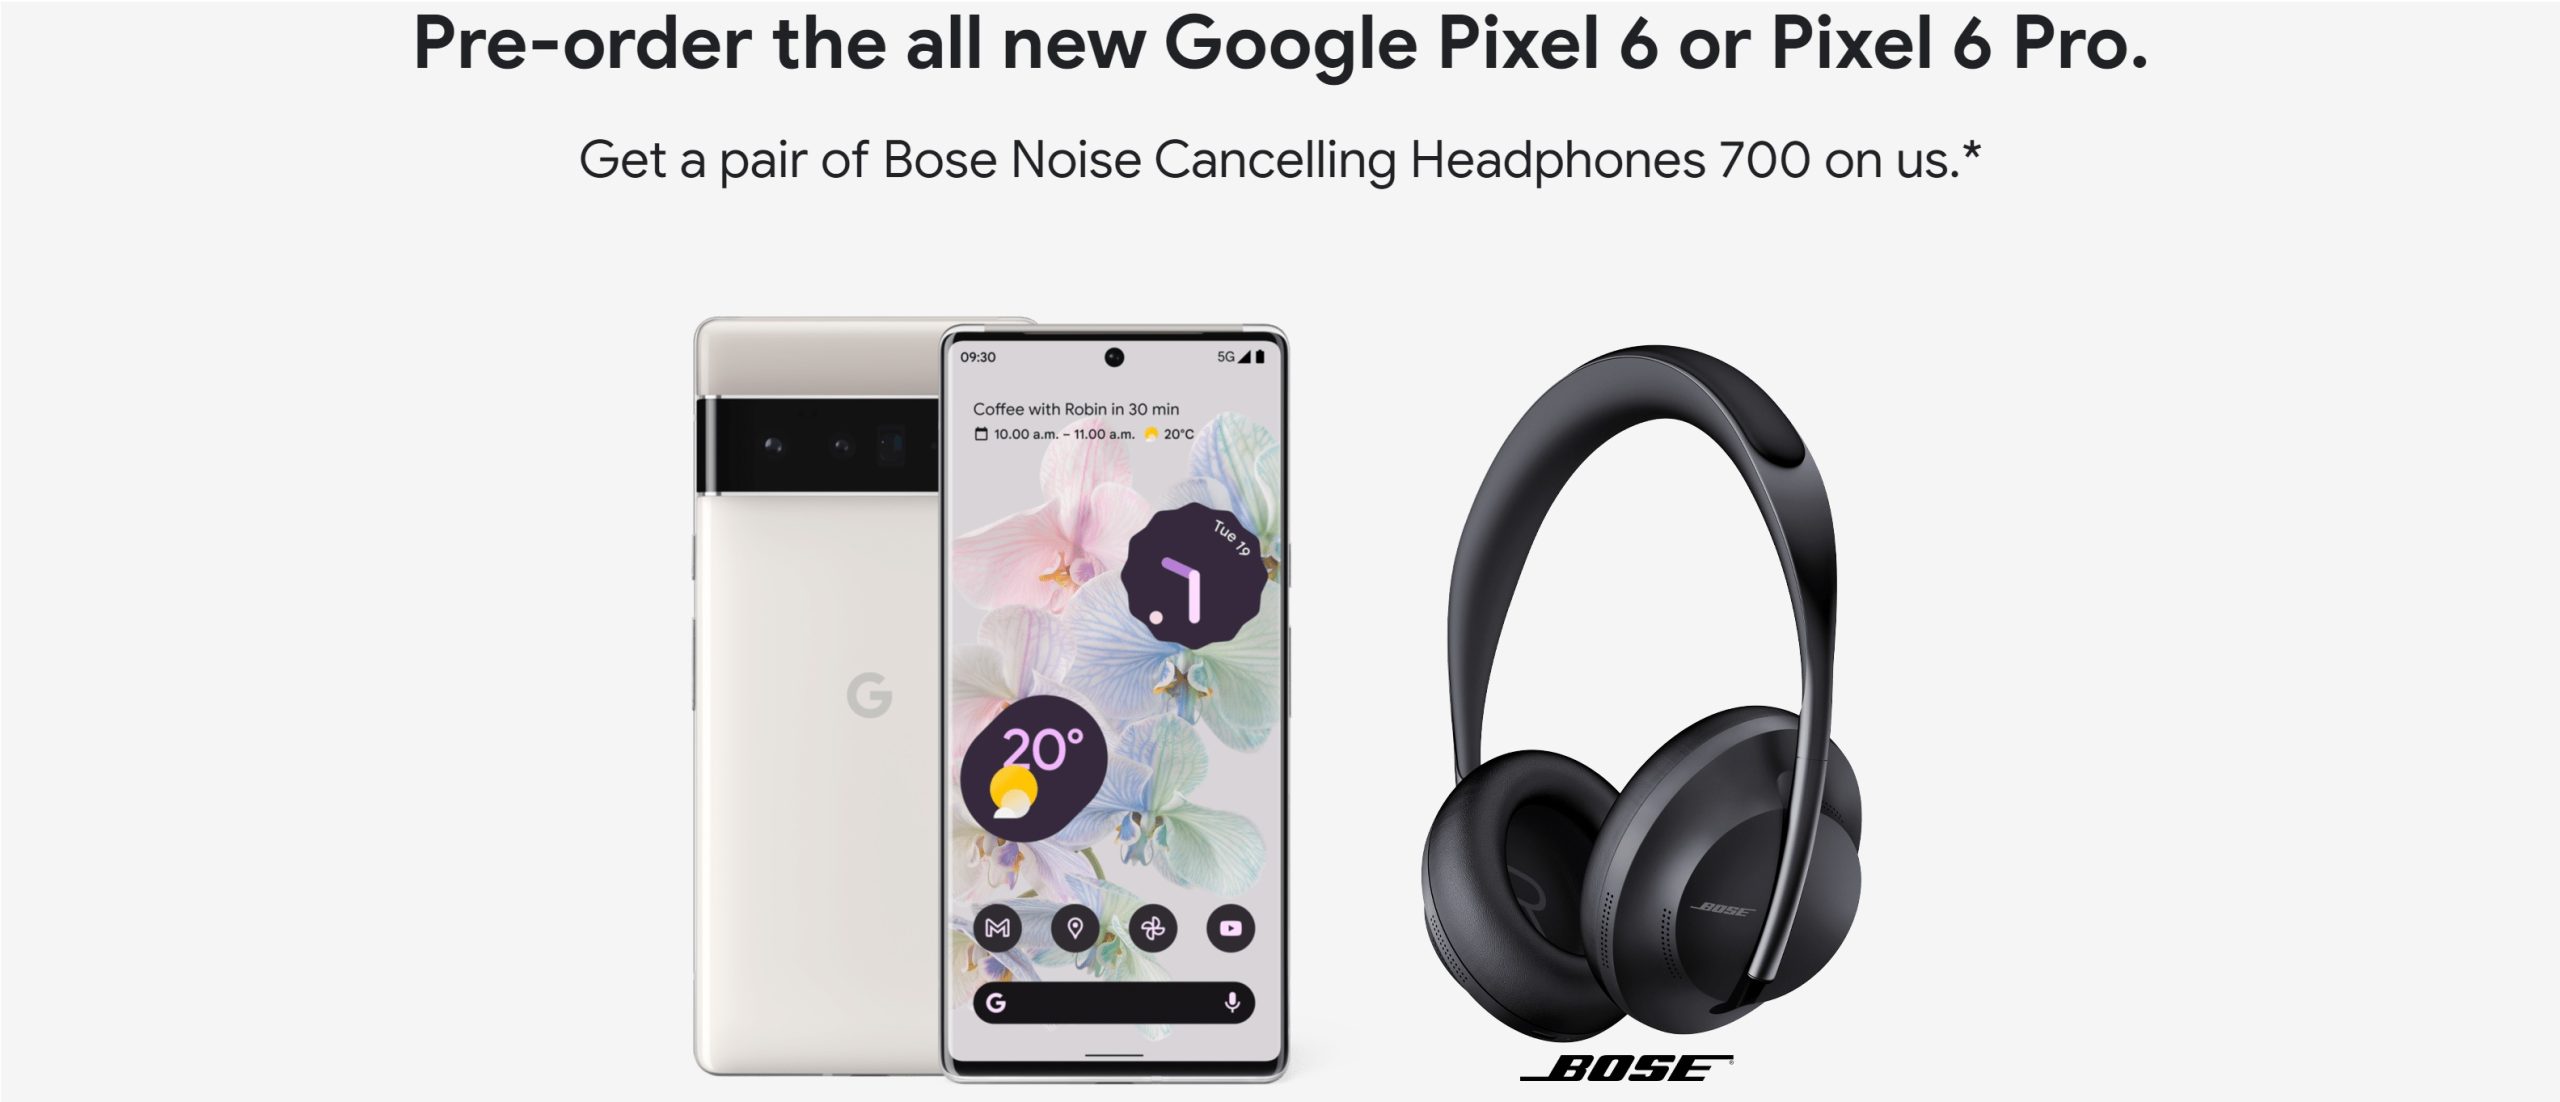 Free Bose 700 Headphones with Google Pixel 6 Deals